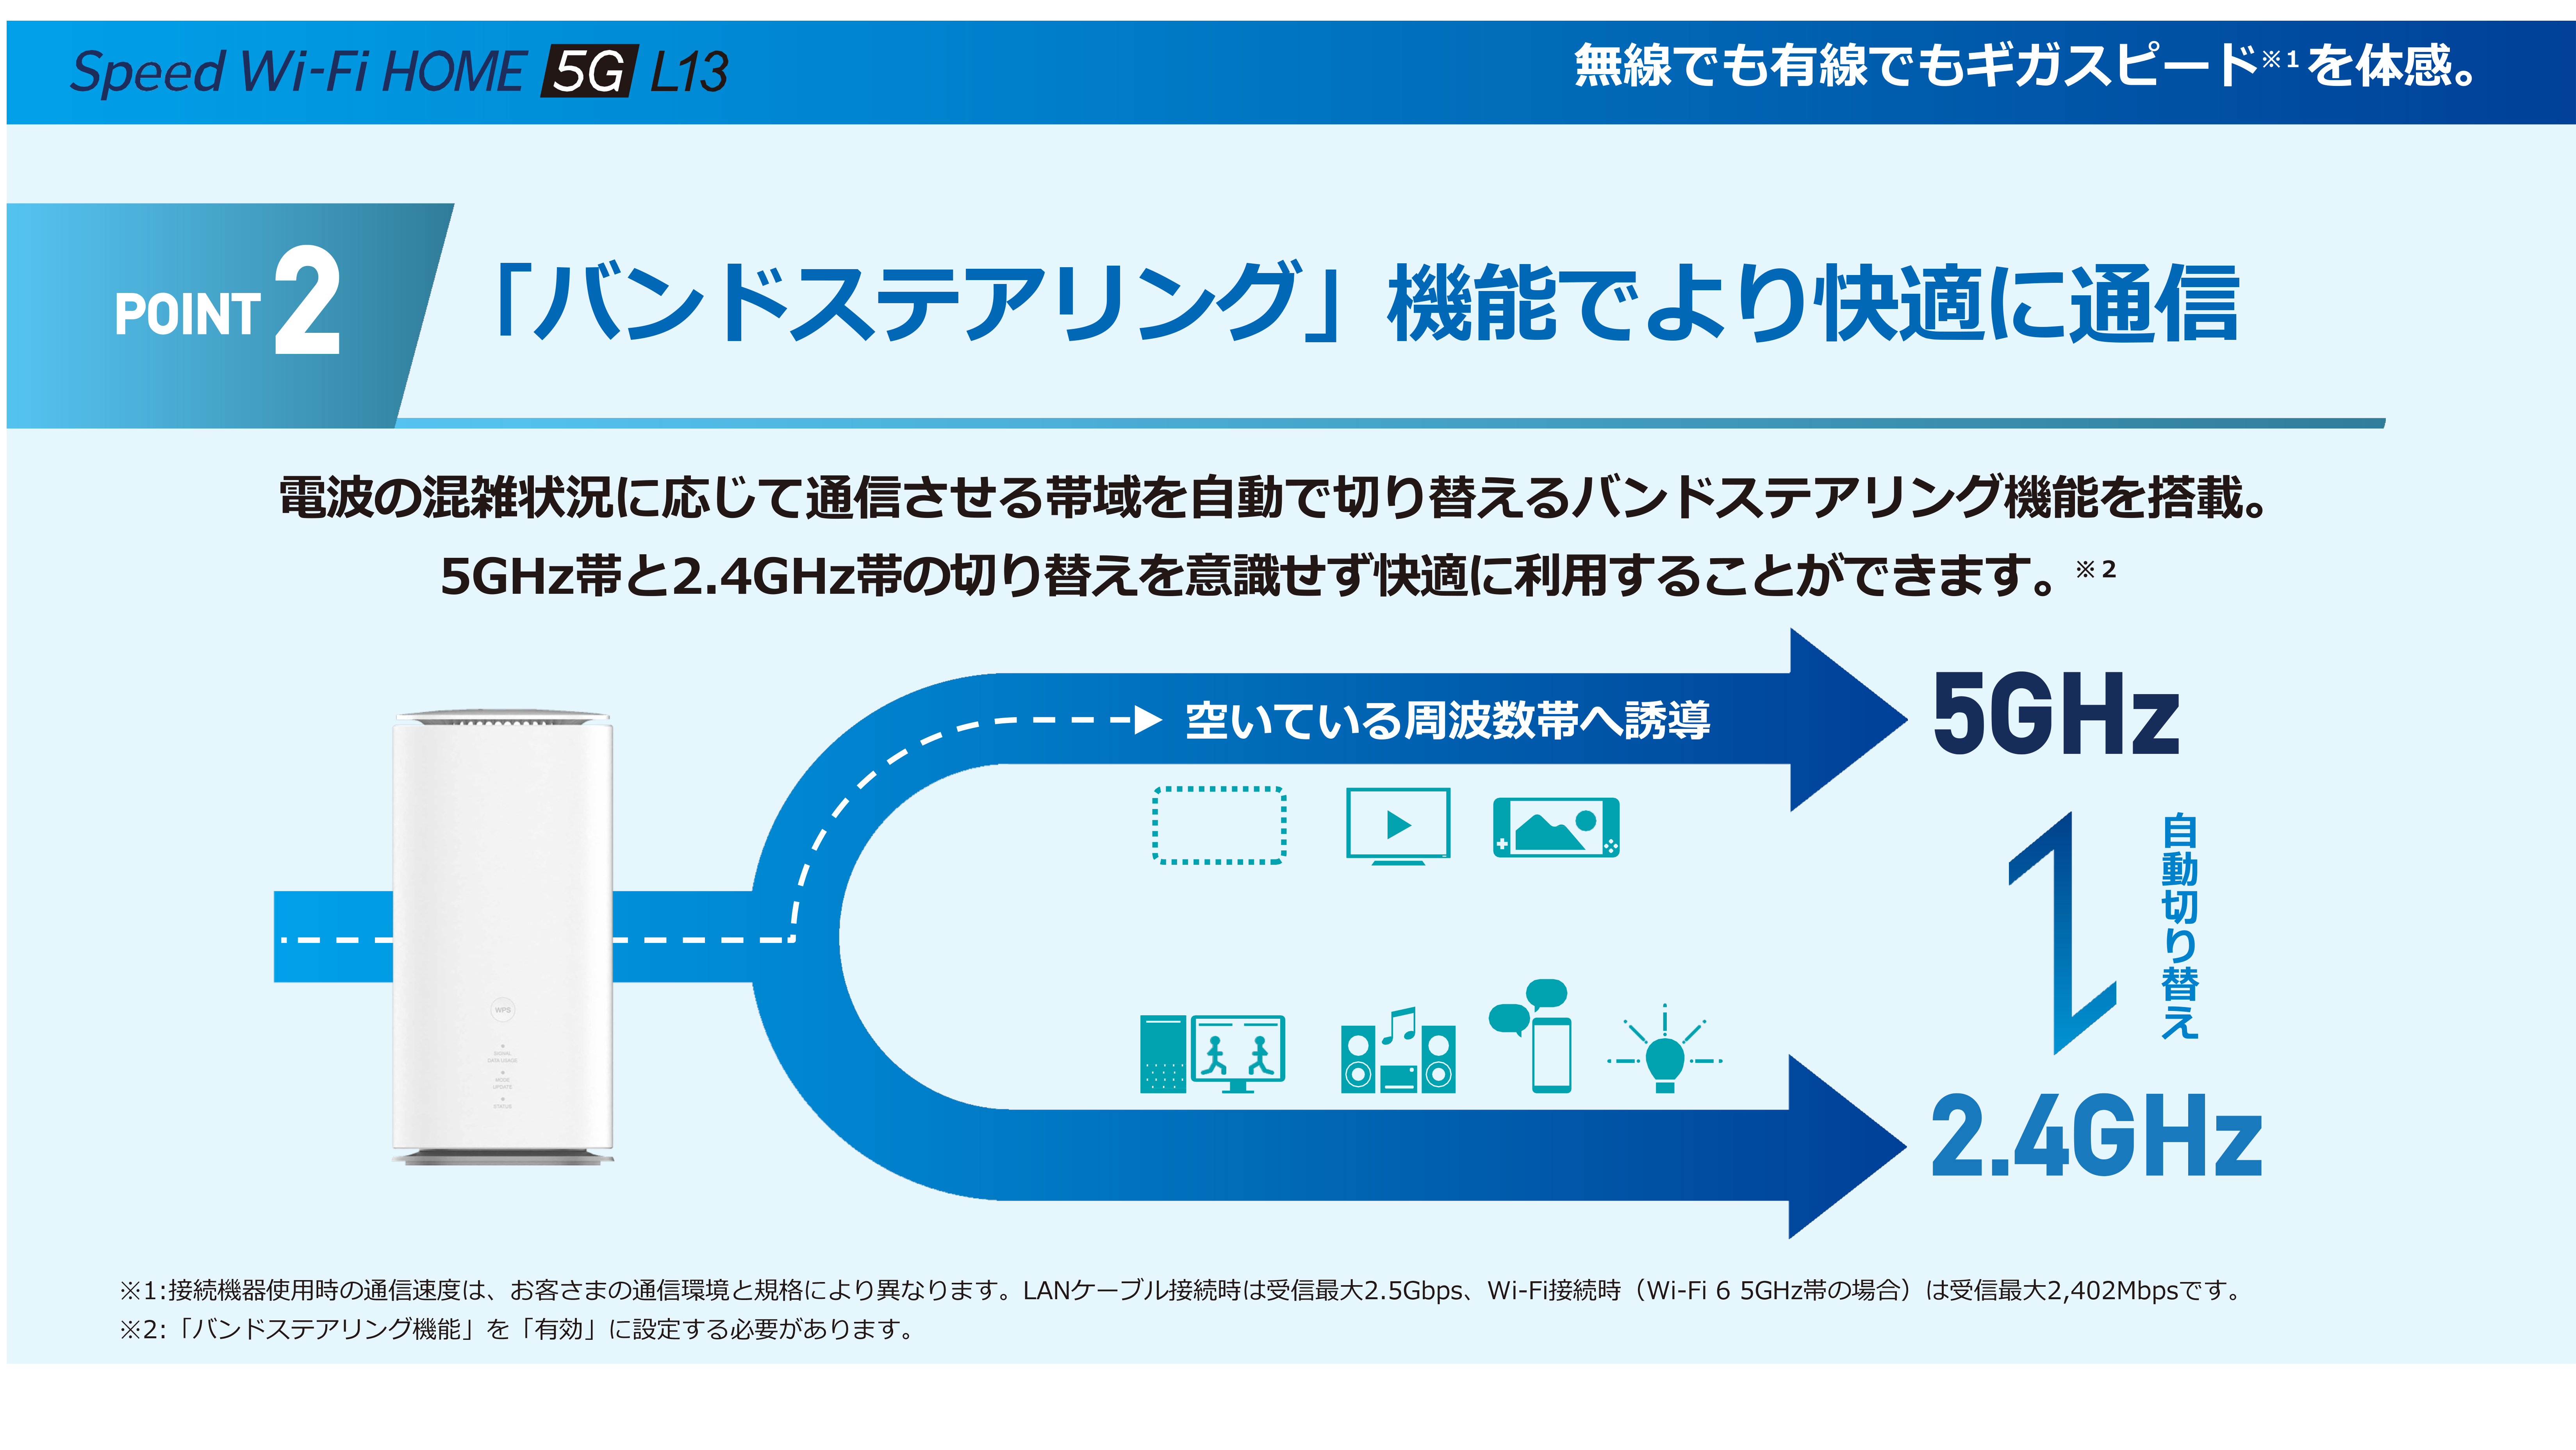 Speed Wi-Fi HOME 5G L13 – ZTE Device Japan